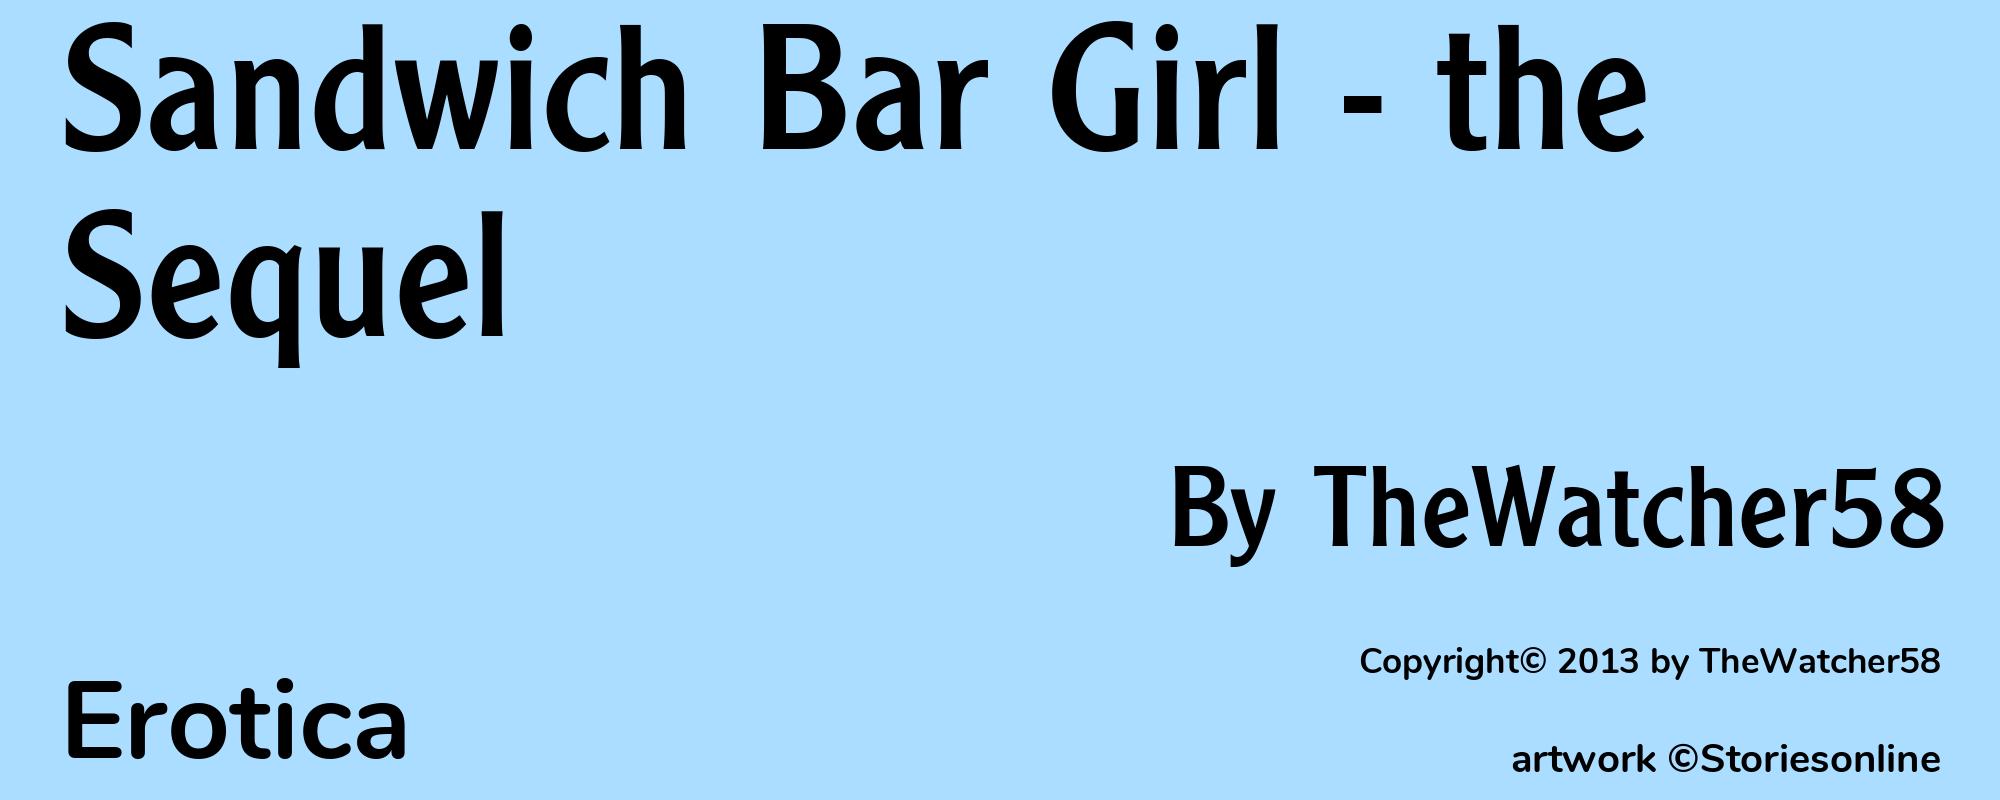 Sandwich Bar Girl - the Sequel - Cover